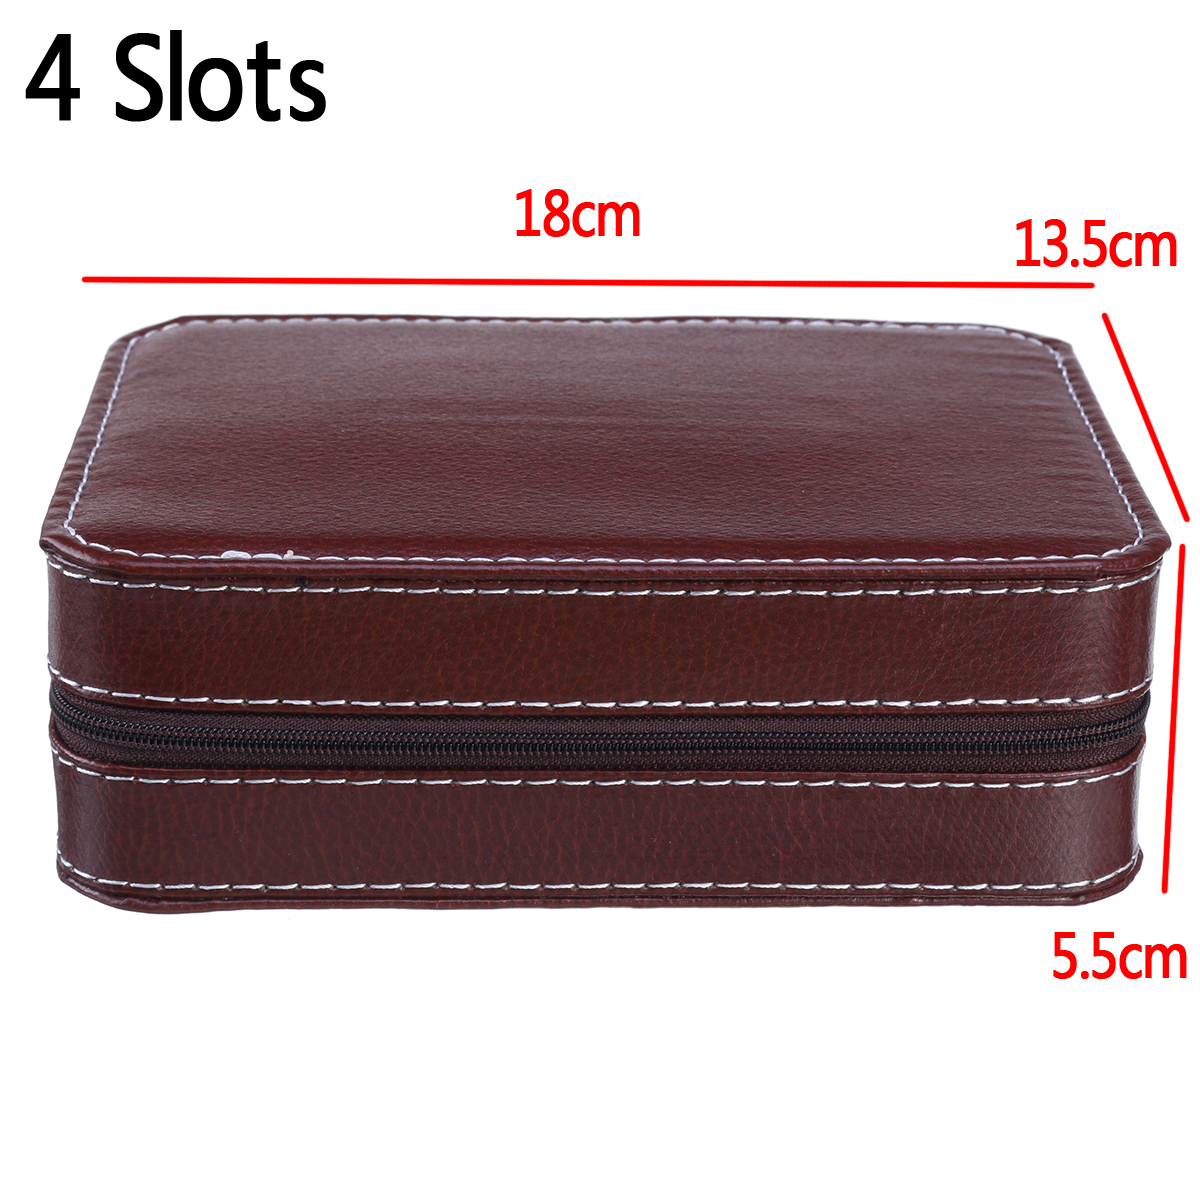 248-Slots-Portable-PU-Leather-Zipper-Watch-Box-Watch-Storage-Case-Bag-1650319-4